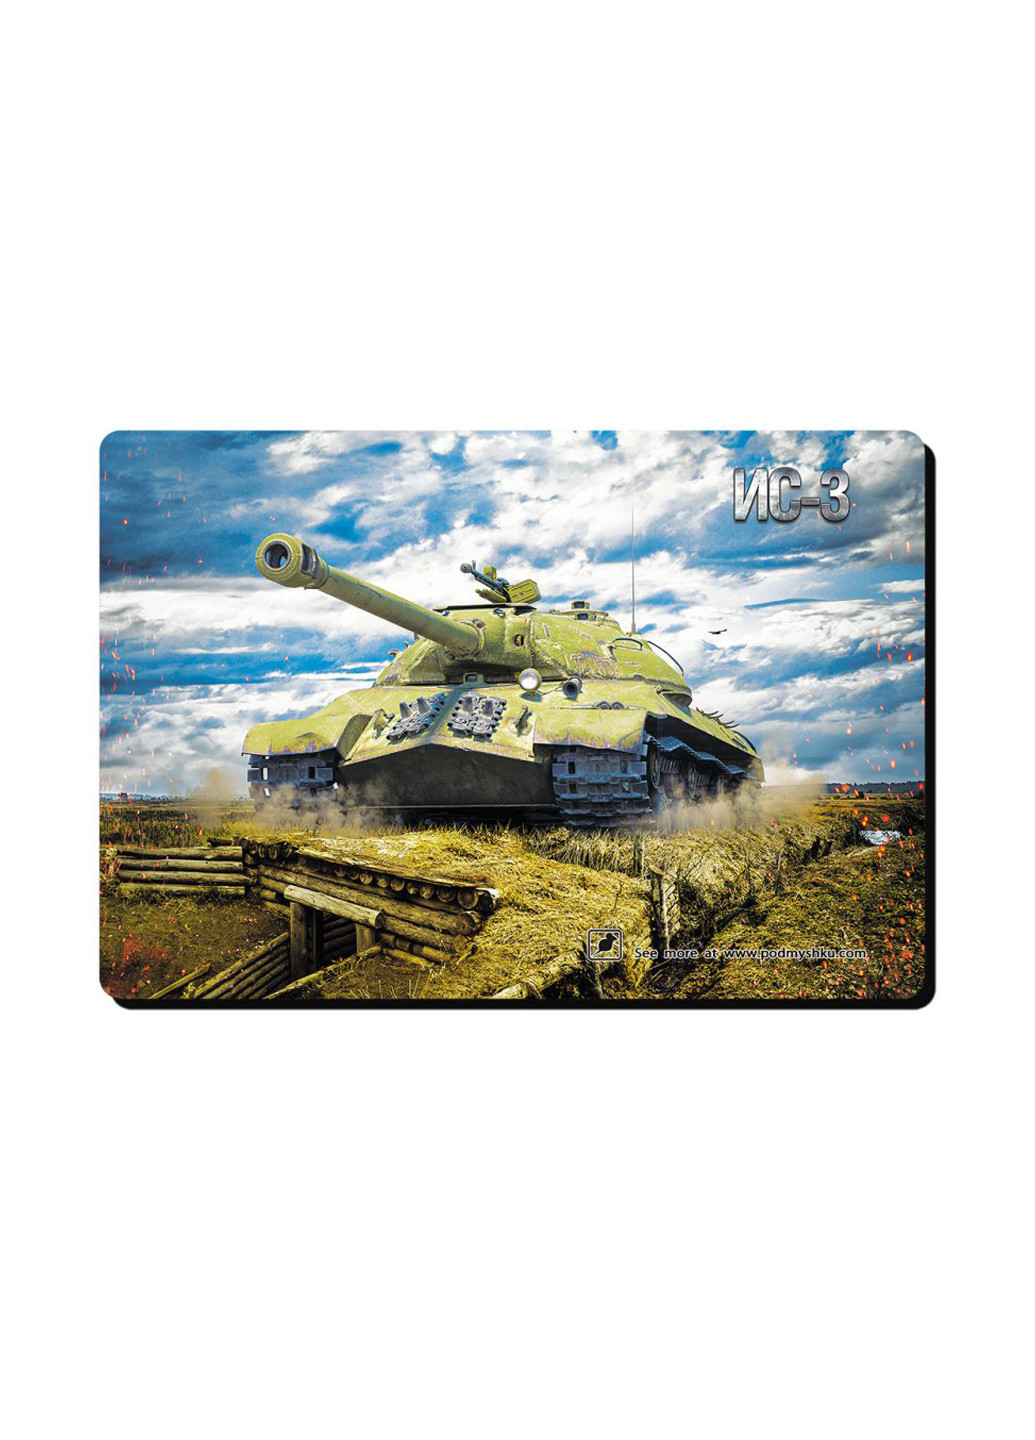 Килимок для миші GAME Танк ІС-3-М Podmyshku game танк ис-3-м (135773440)